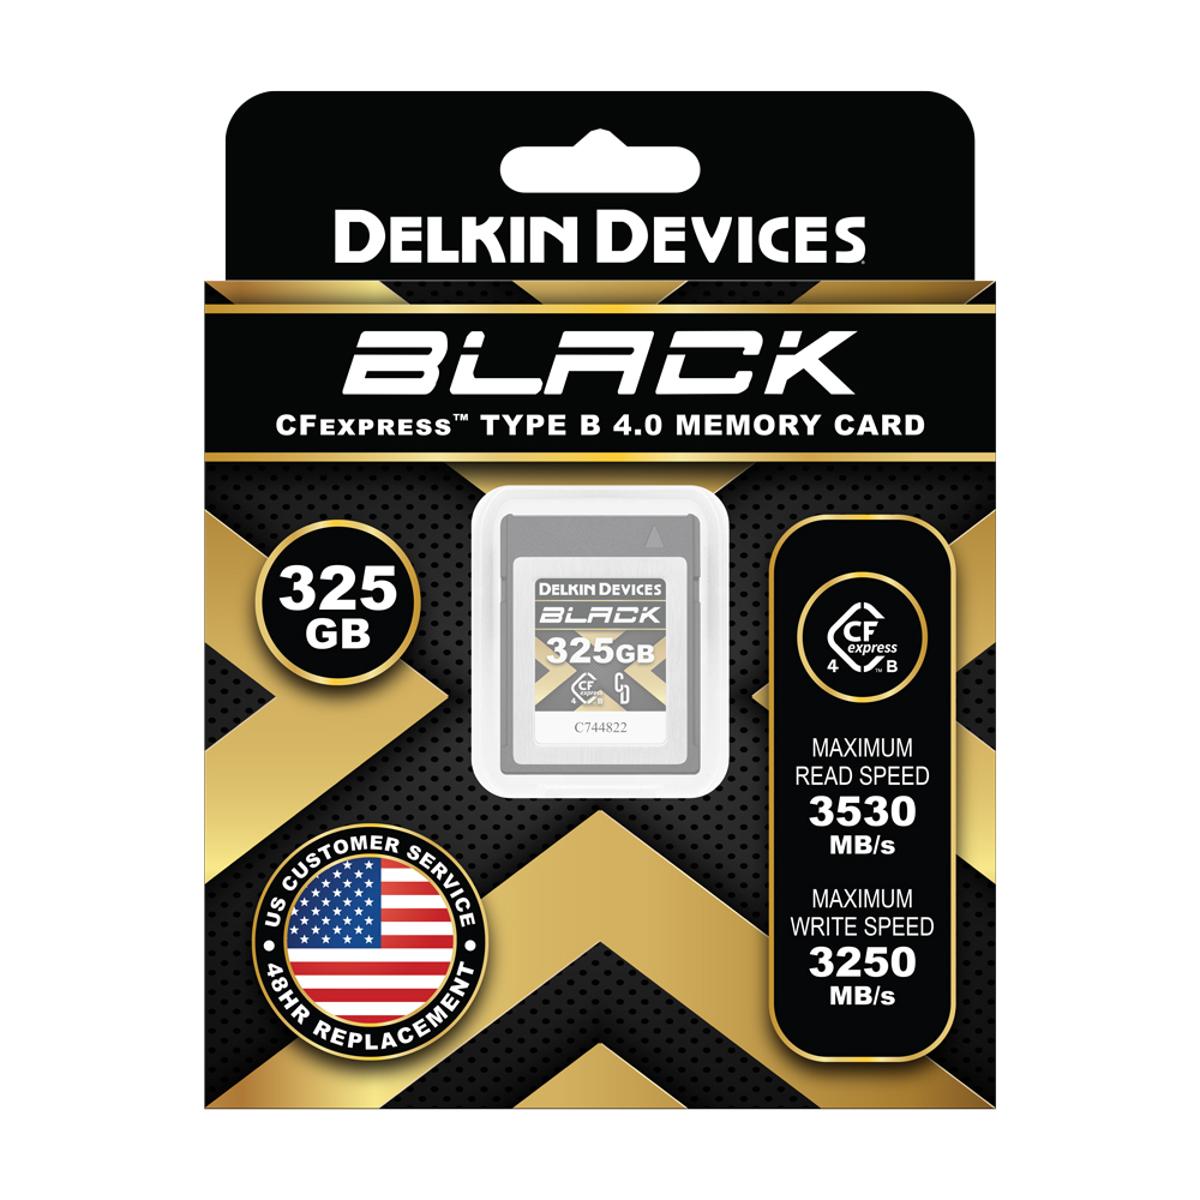 Delkin BLACK 325GB 4.0 CFexpress Type B Memory Card